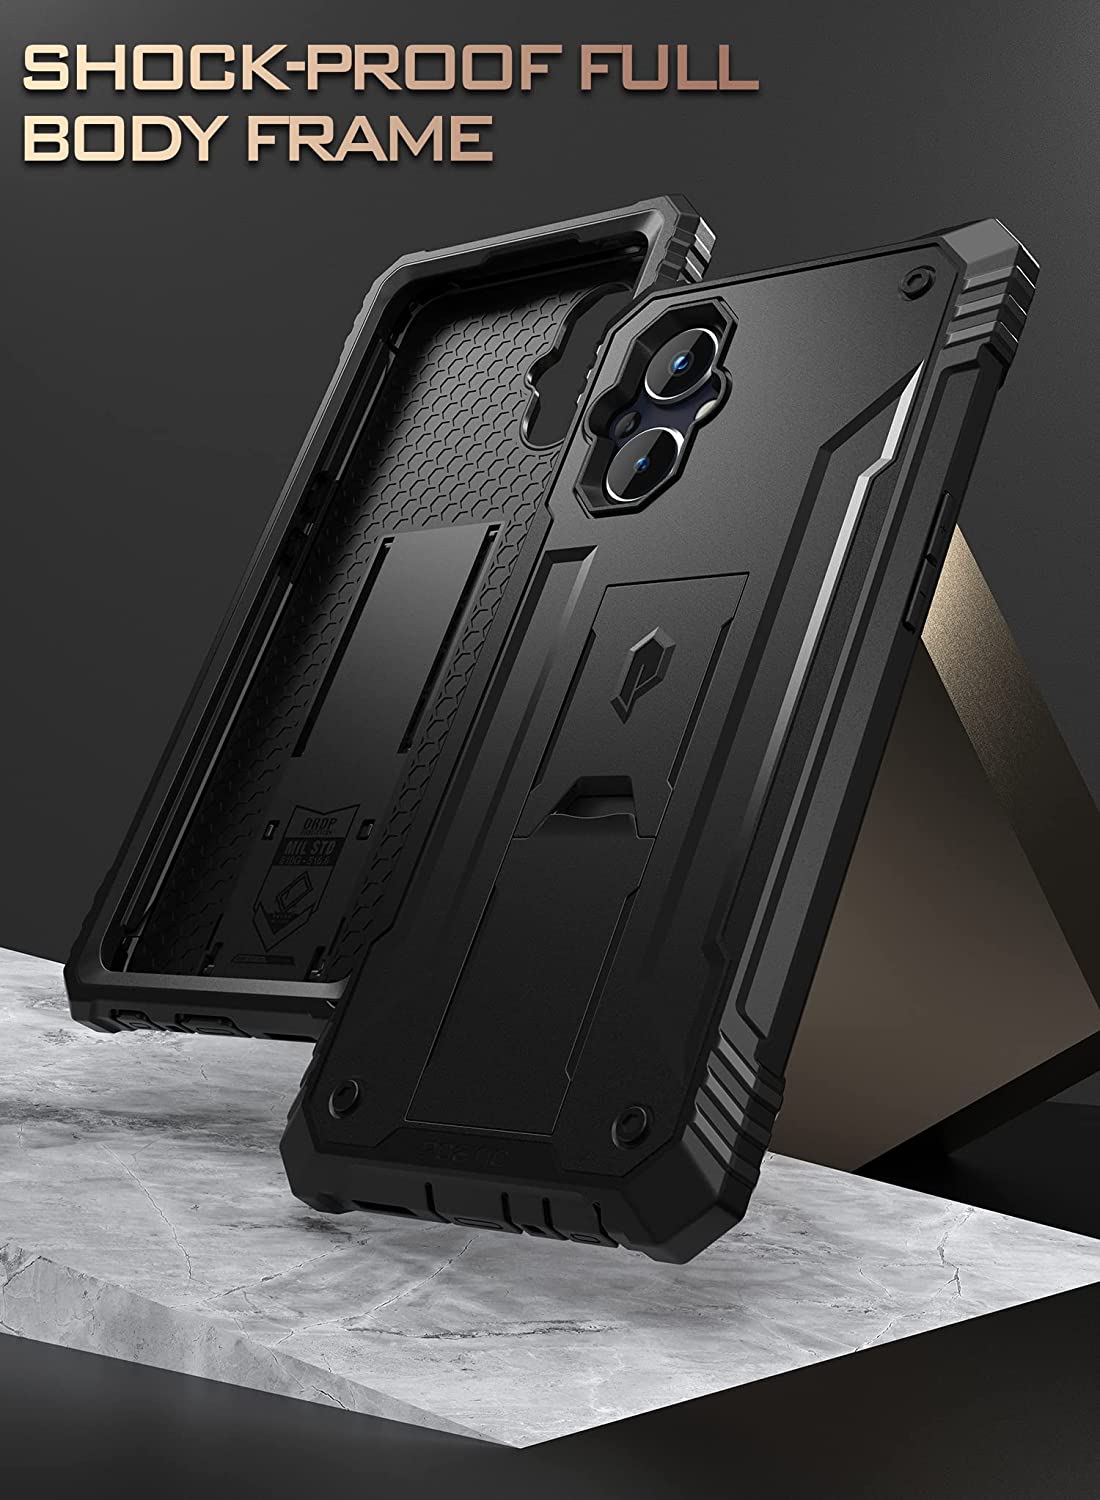 OnePlus Nord N20 5G Case